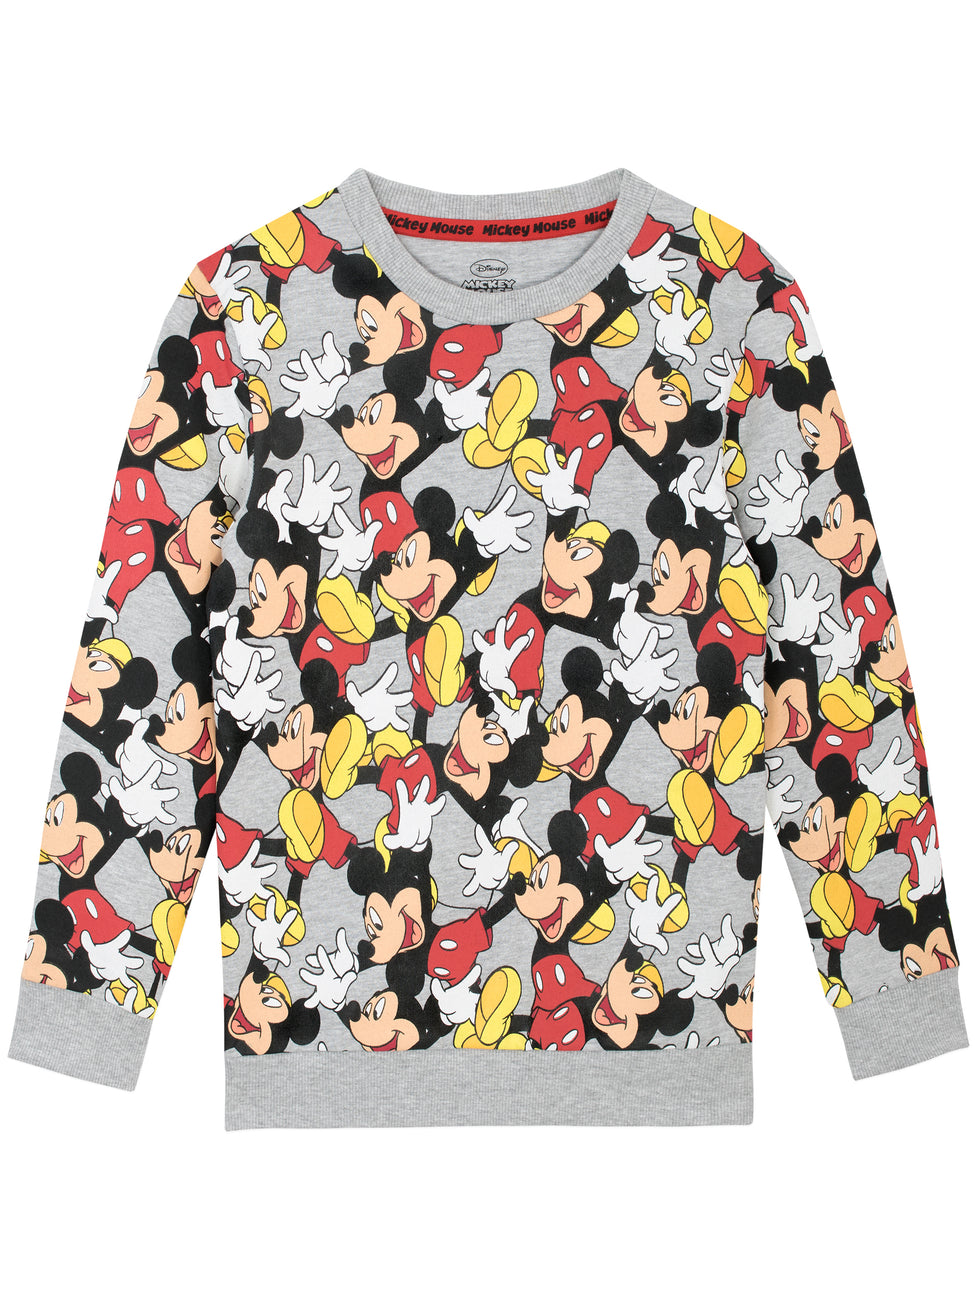 Shop Mickey Mouse Sweatshirt | Kids | Character.com Official Merch